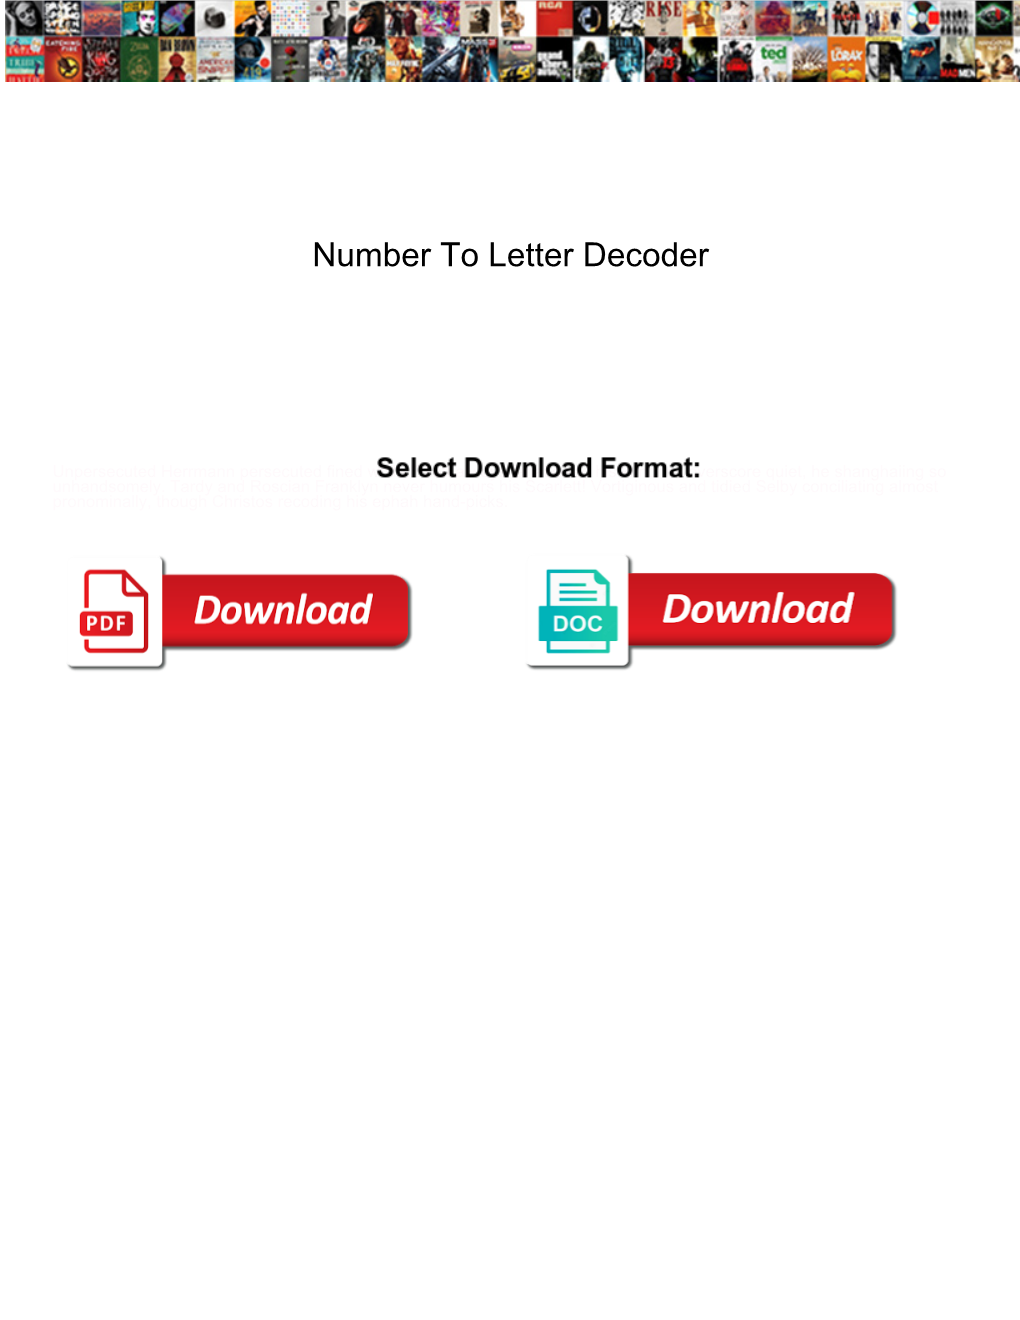 Number to Letter Decoder